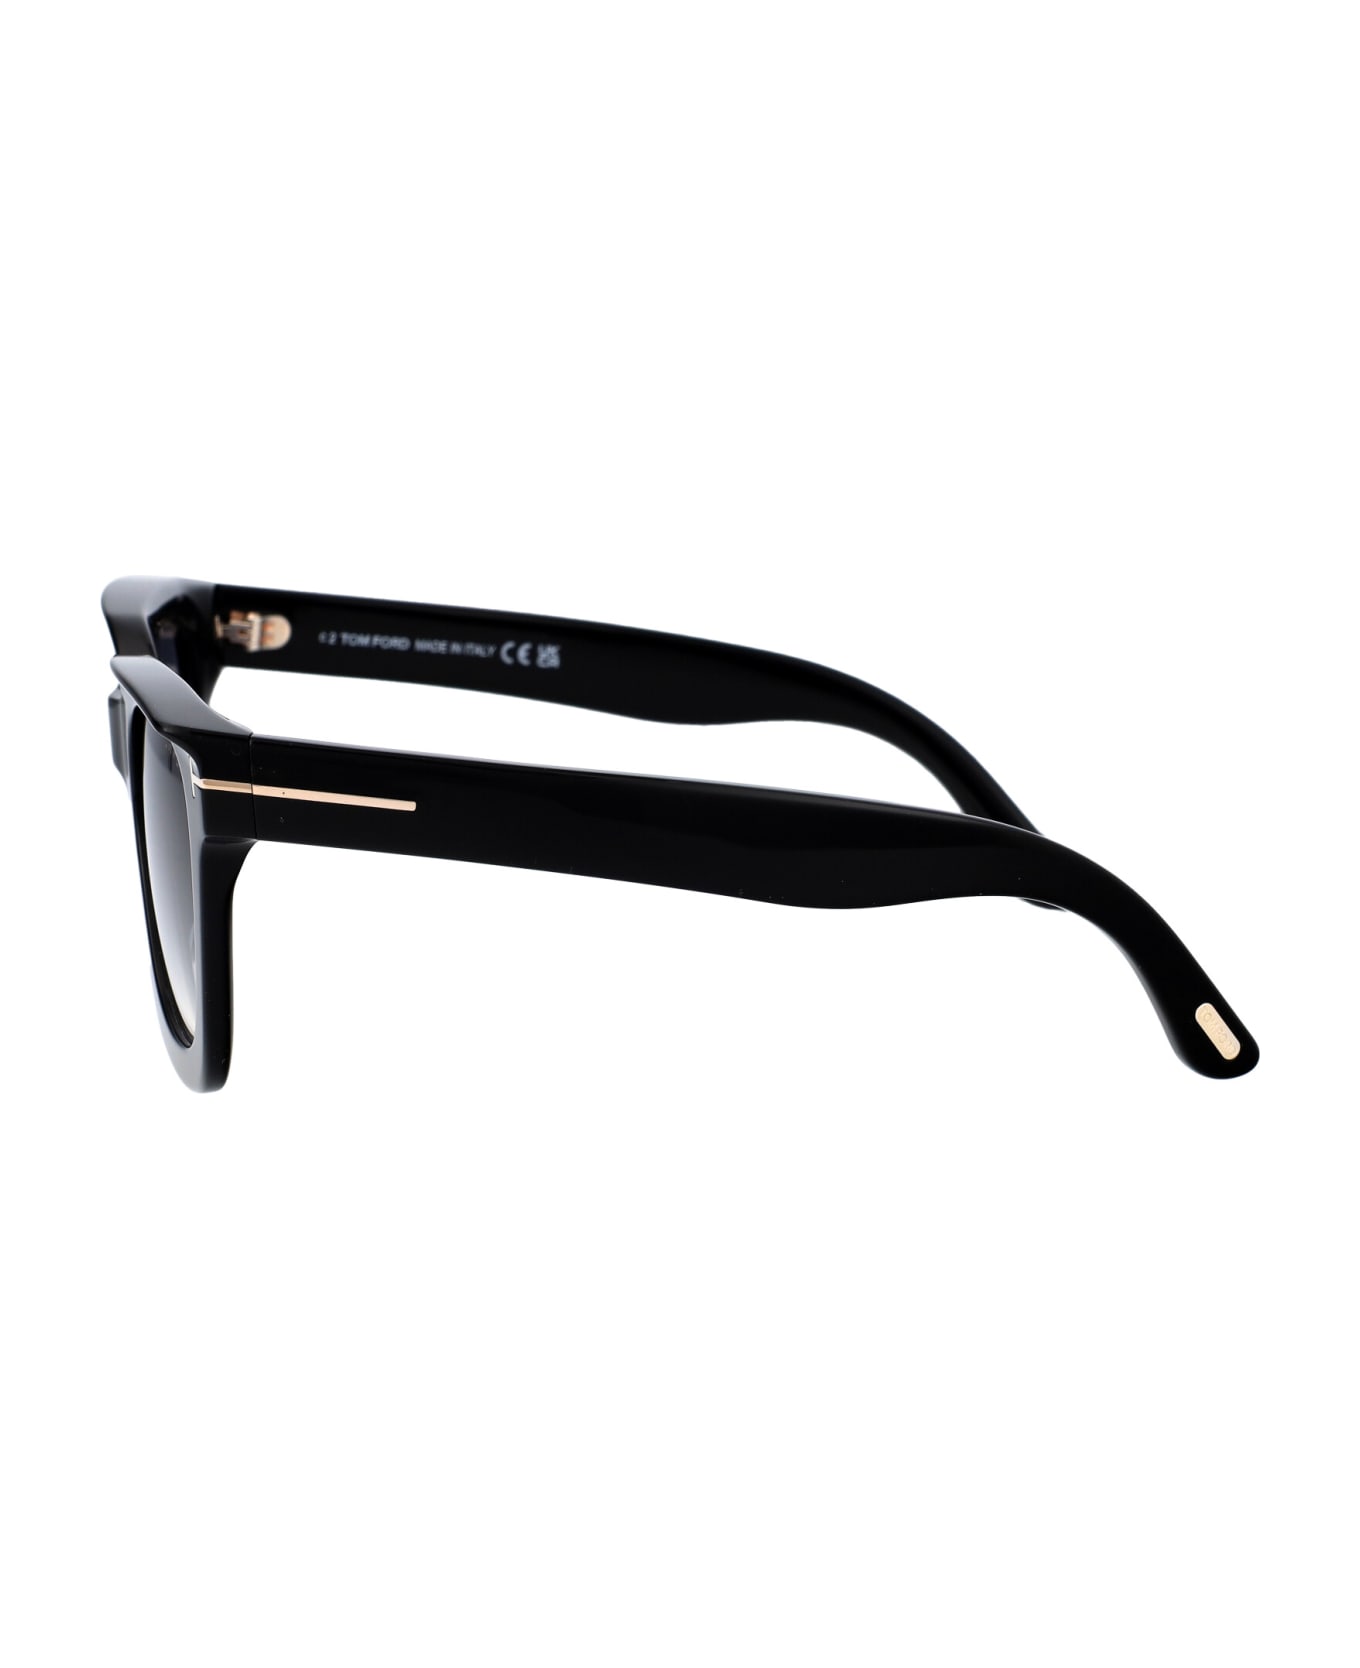 Tom Ford Eyewear Leigh-02 Sunglasses - 01B Nero Lucido / Fumo Grad